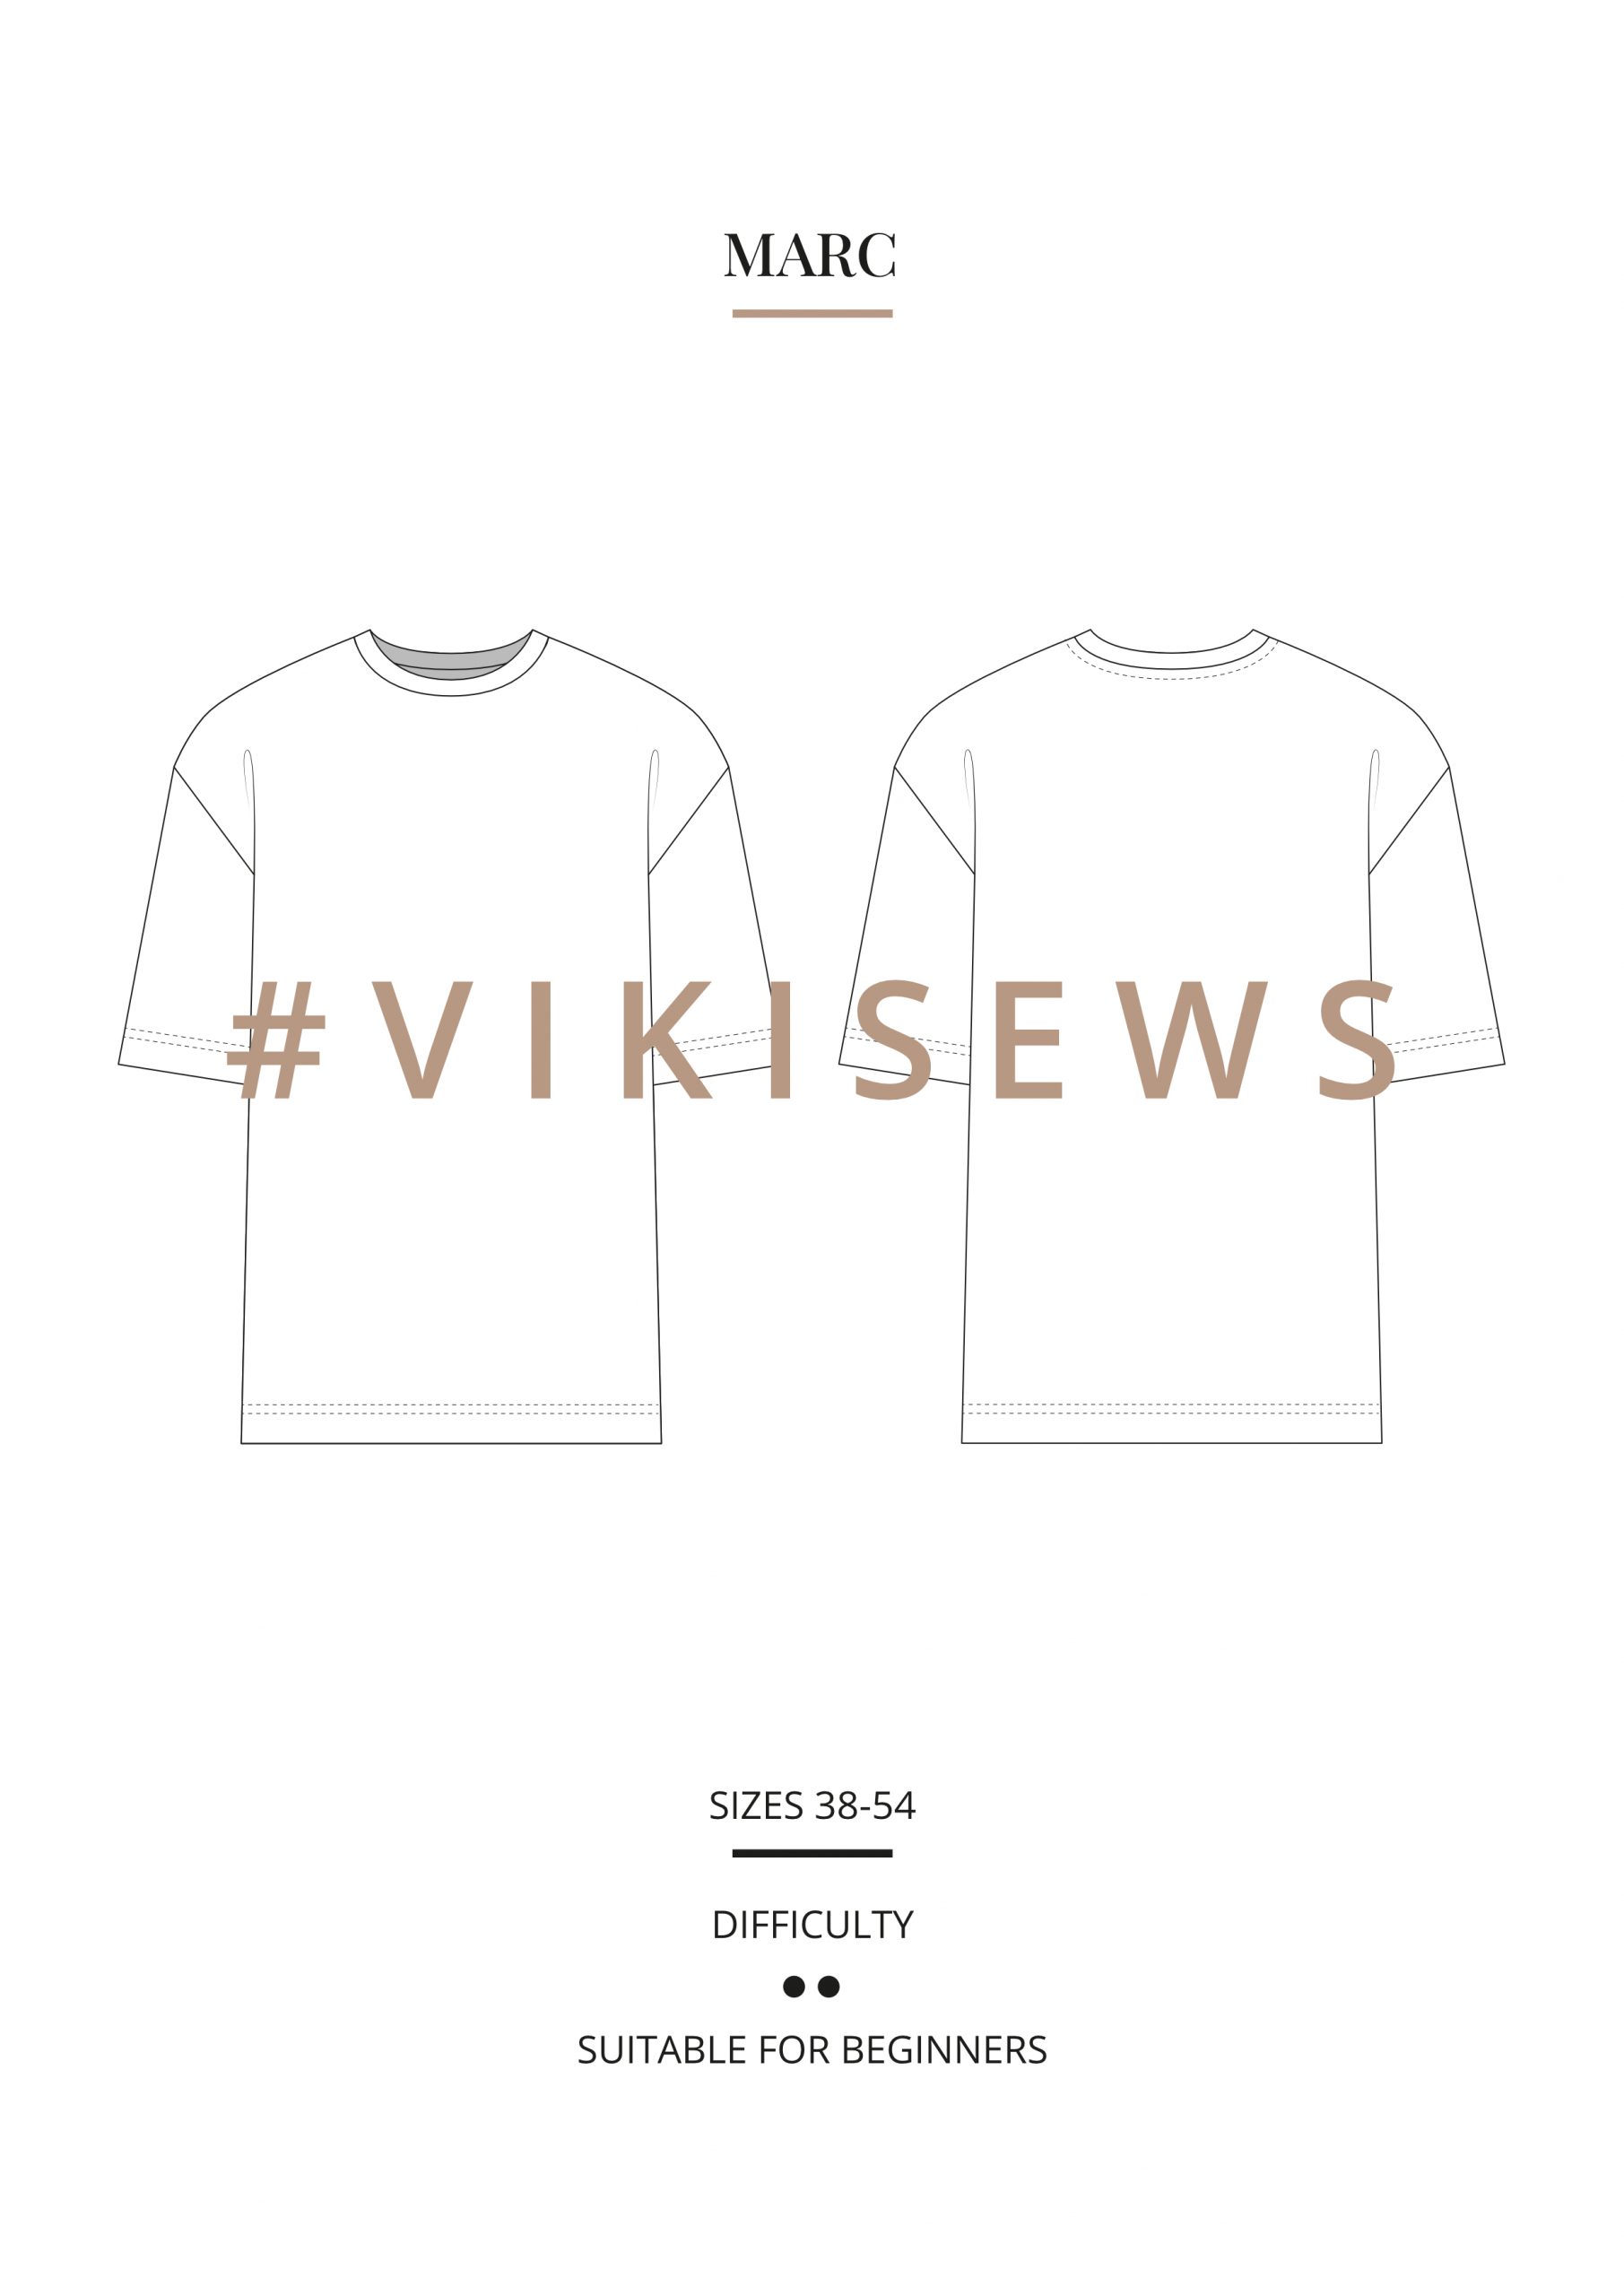 Vikisews Men's Marc T-shirt PDF